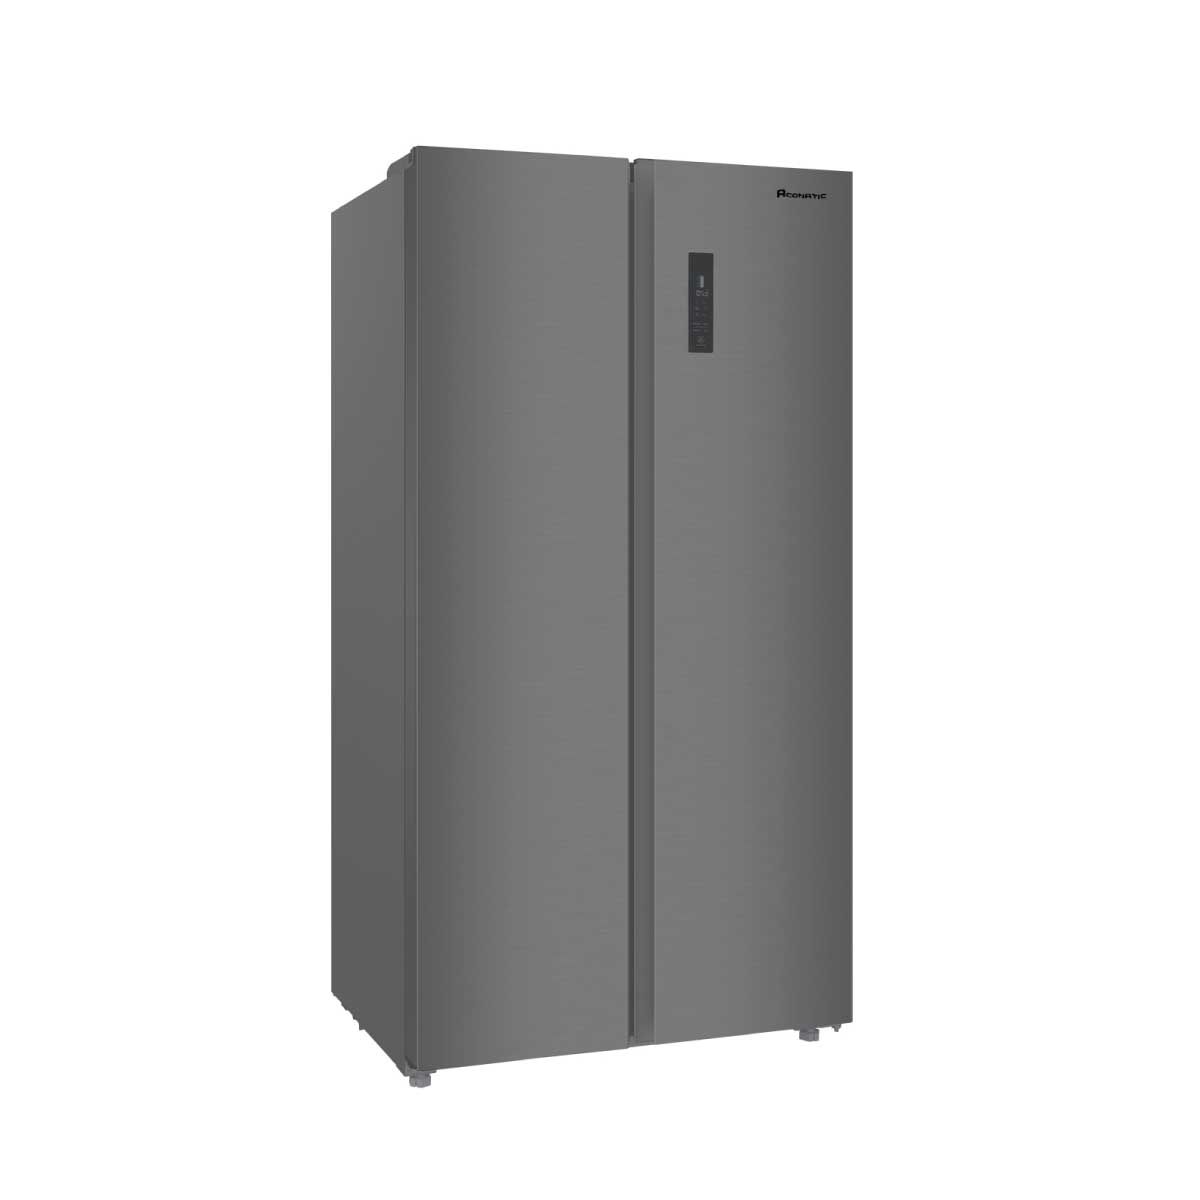 ACONATIC ตู้เย็น SidebySide 14.1Q สี Silver  รุ่น AN-FR4000S